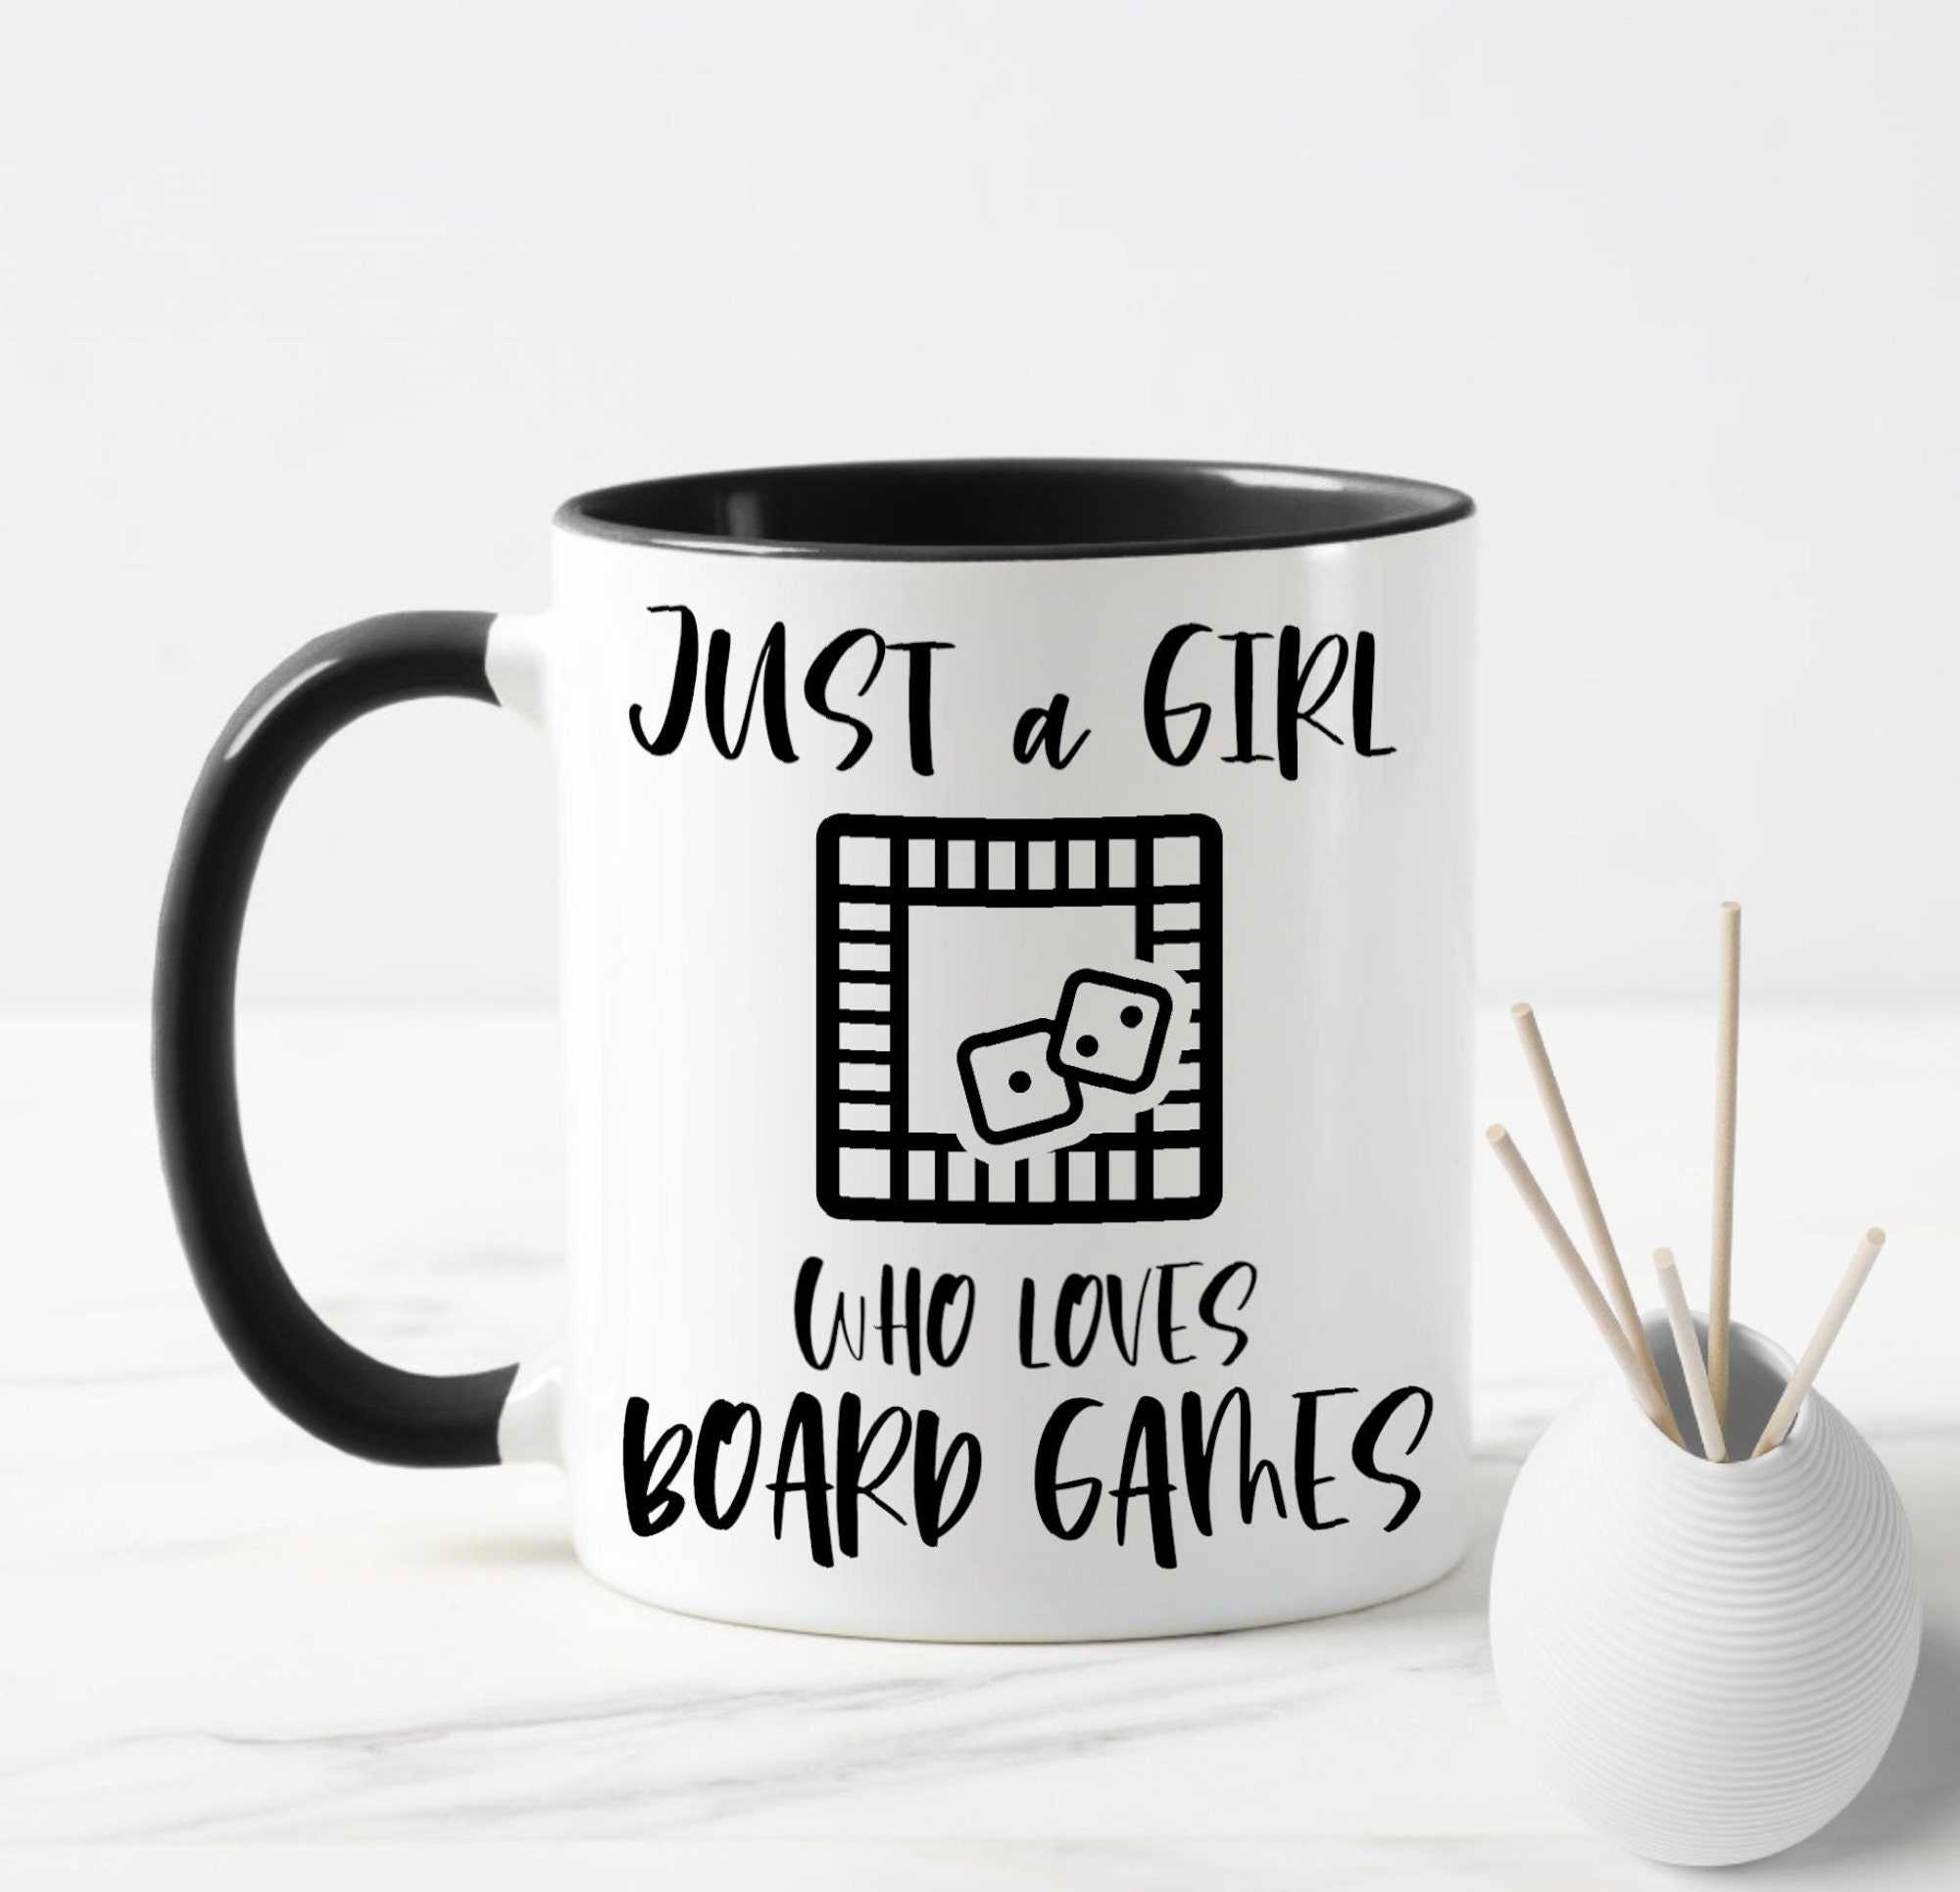 Just a Girl Who Loves Board Games Mug